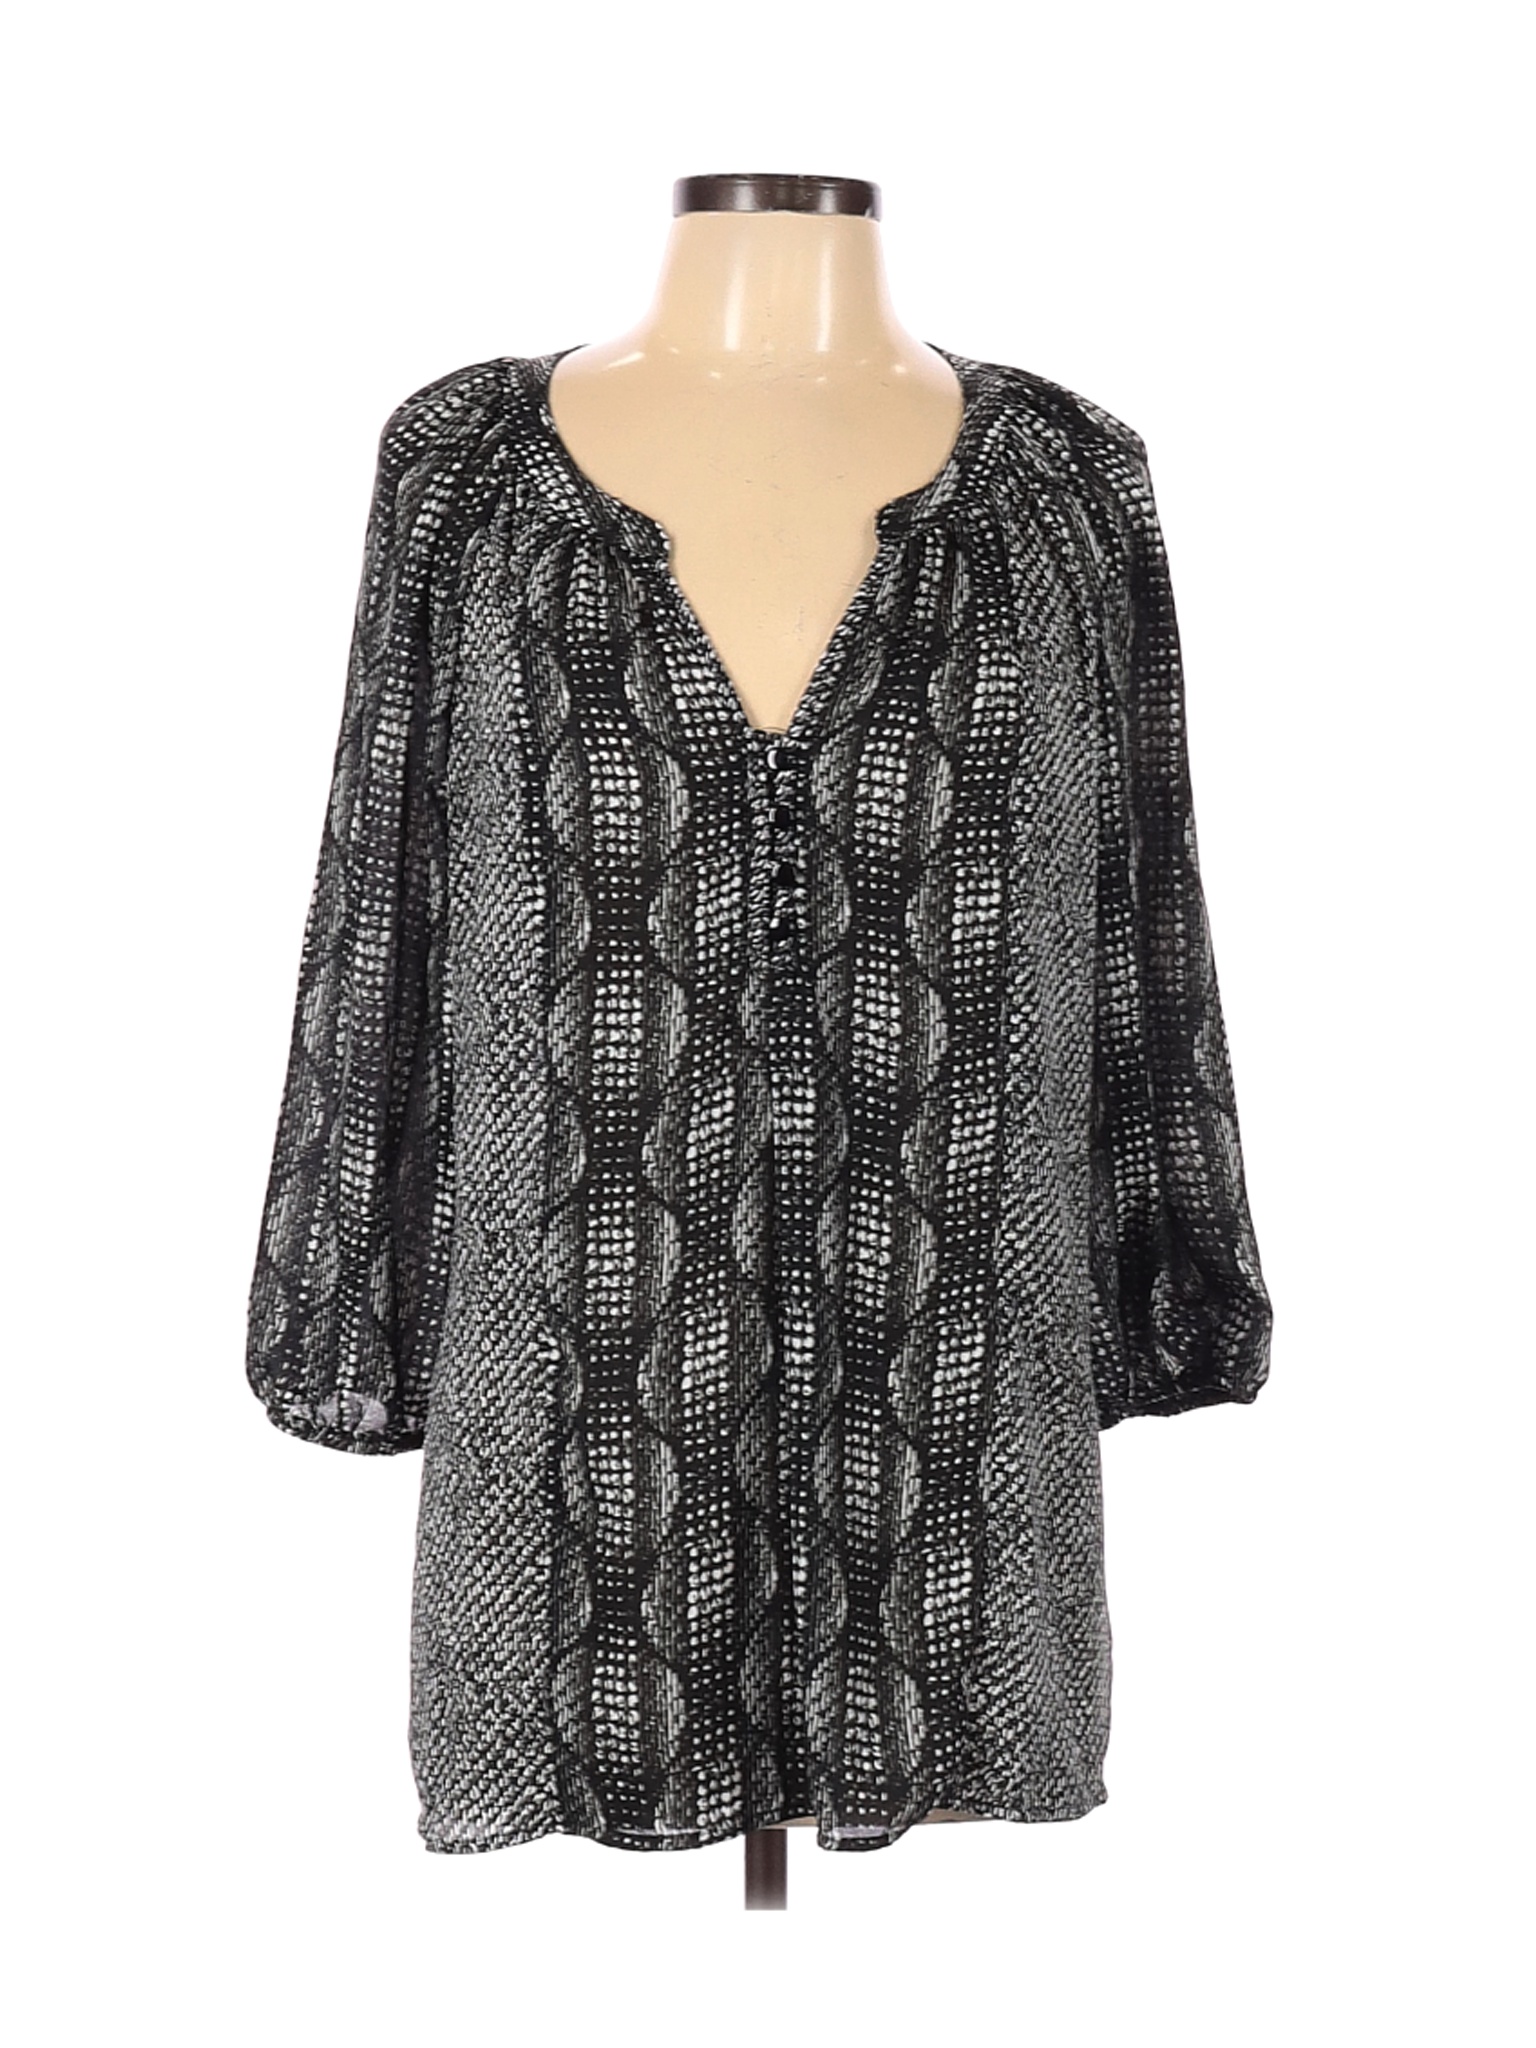 Kim Rogers Women Black Long Sleeve Blouse XL | eBay